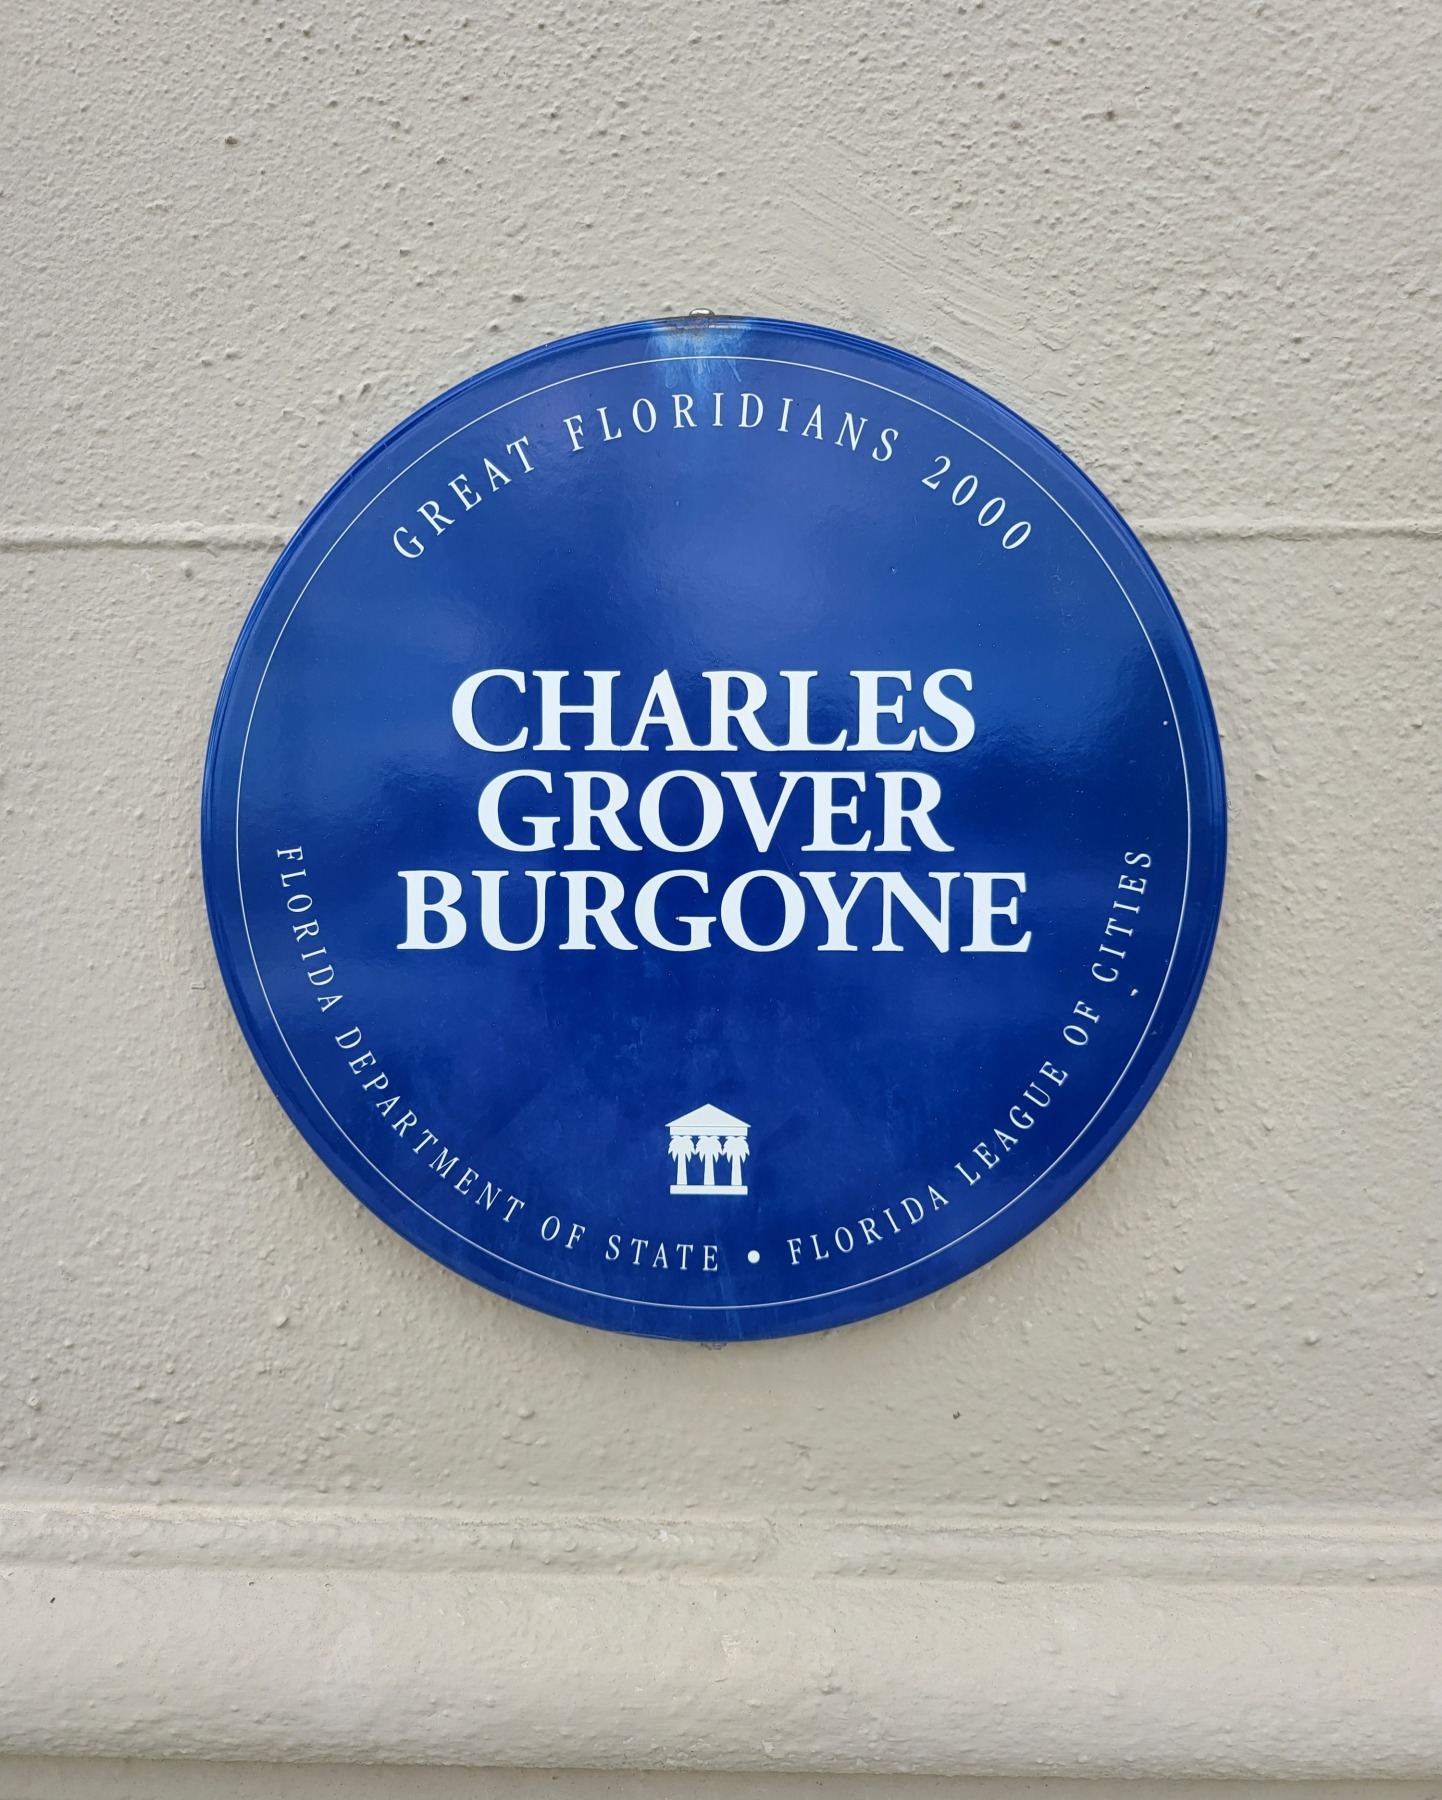 Charles Grover Burgoyne--Great Floridians 2000 marker